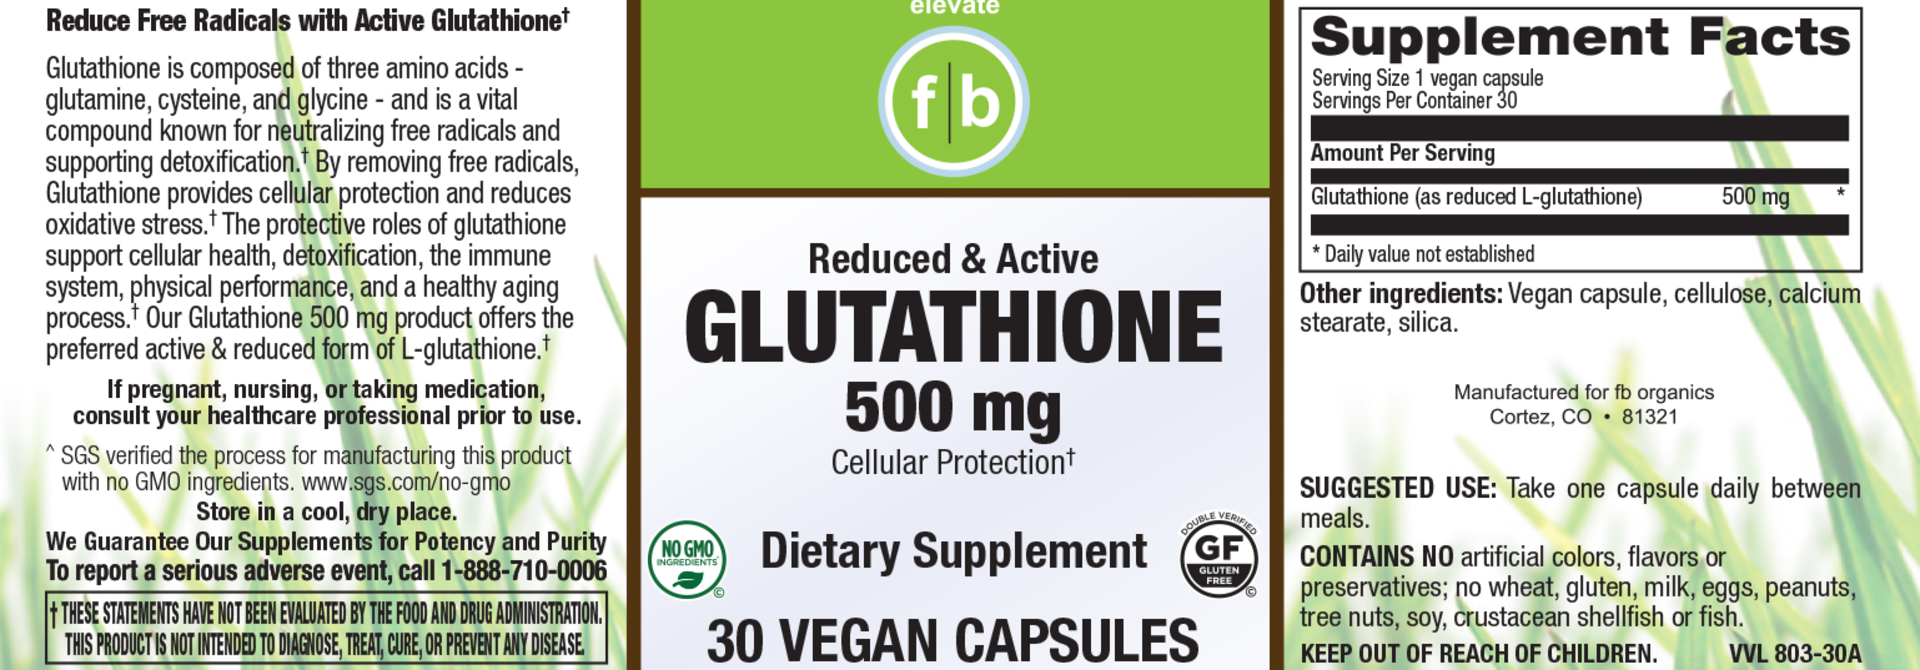 fb REDUCED & ACTIVE GLUTATHIONE 500 mg